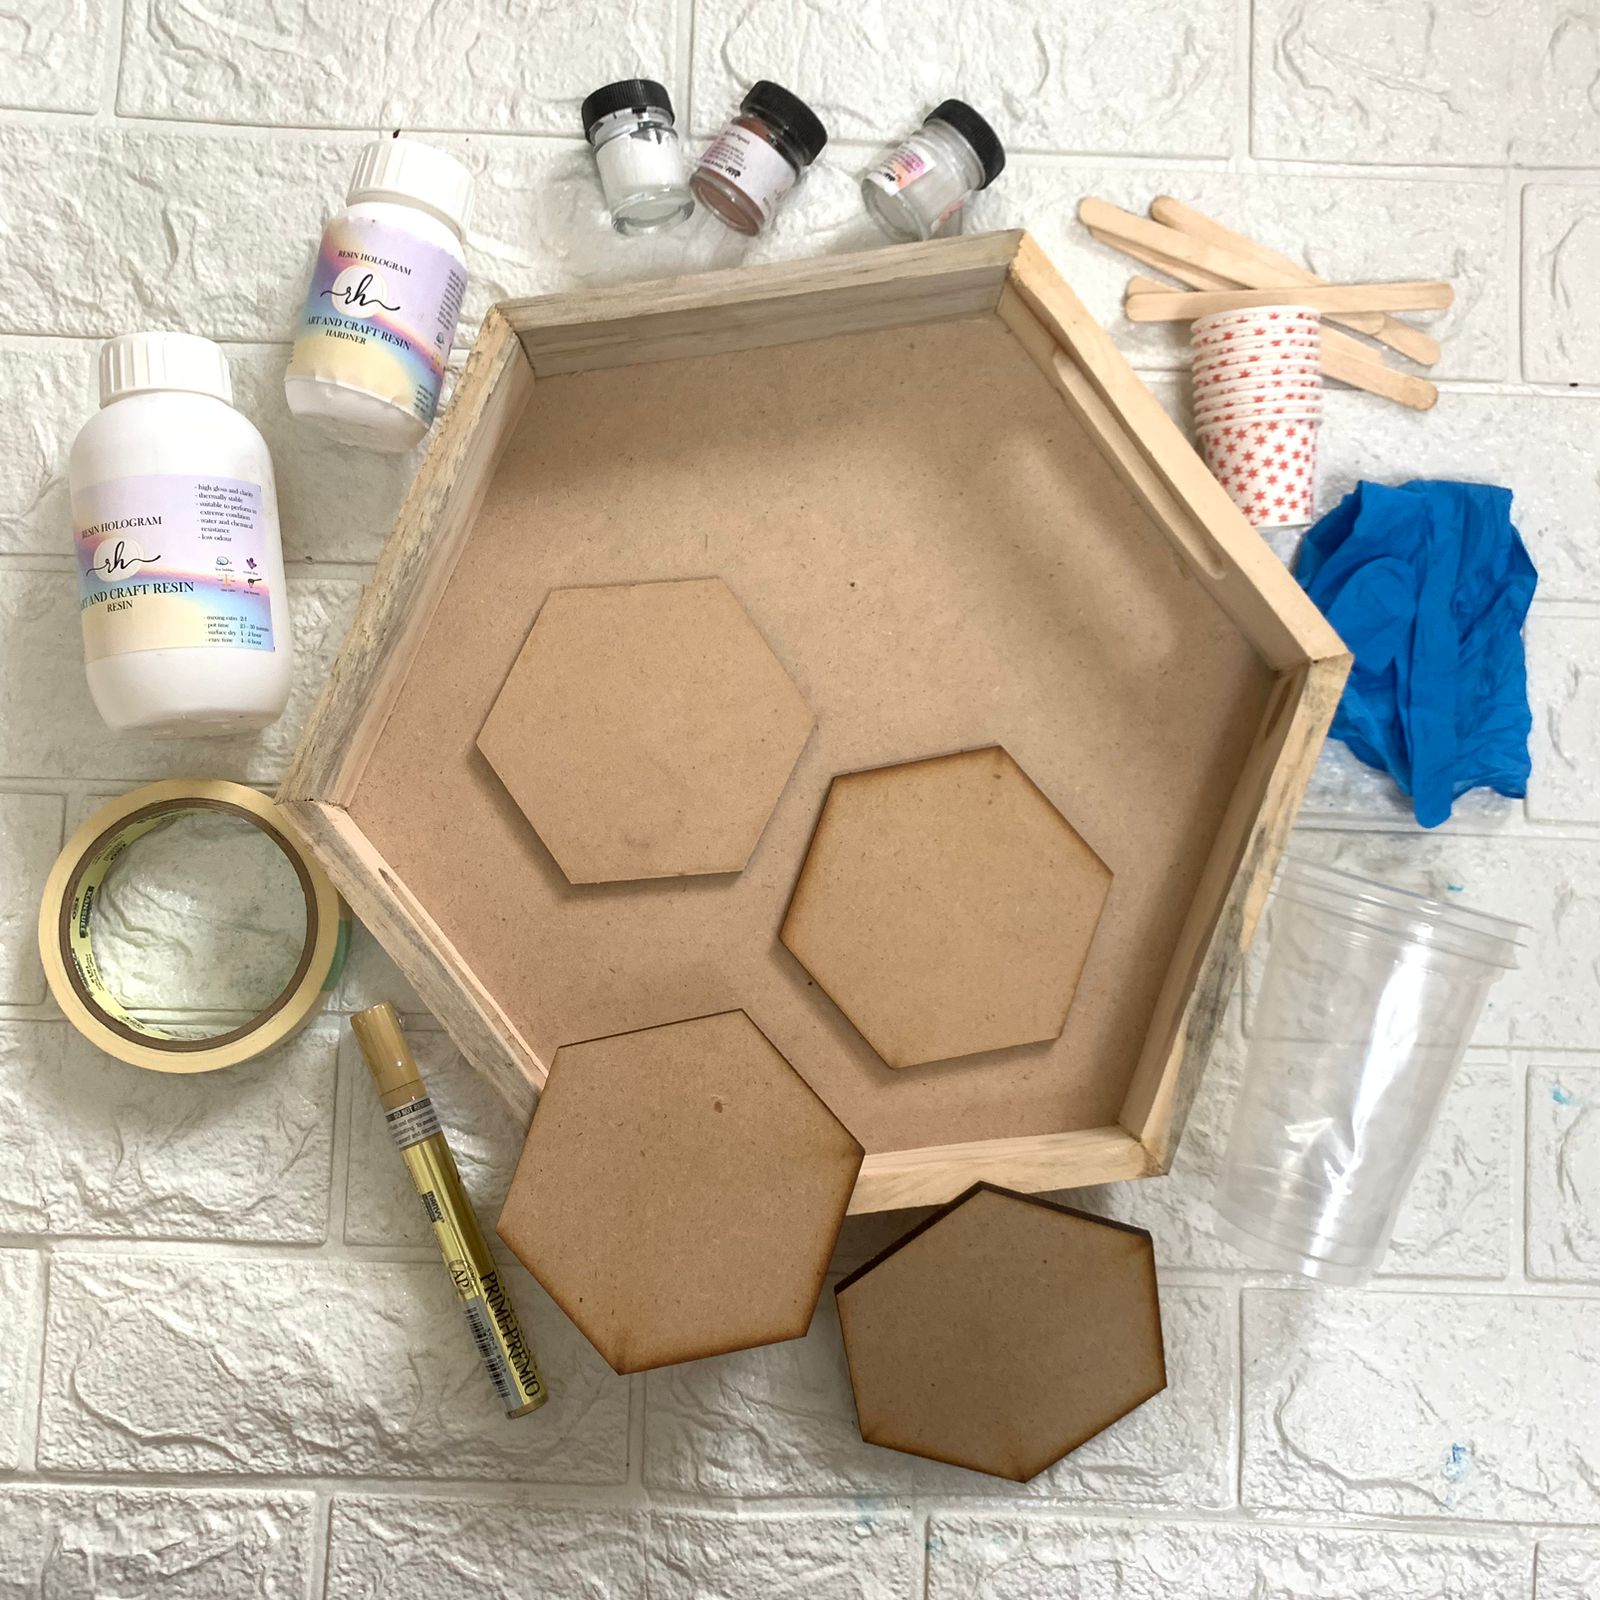 DIY Flower Resin Coaster Kit